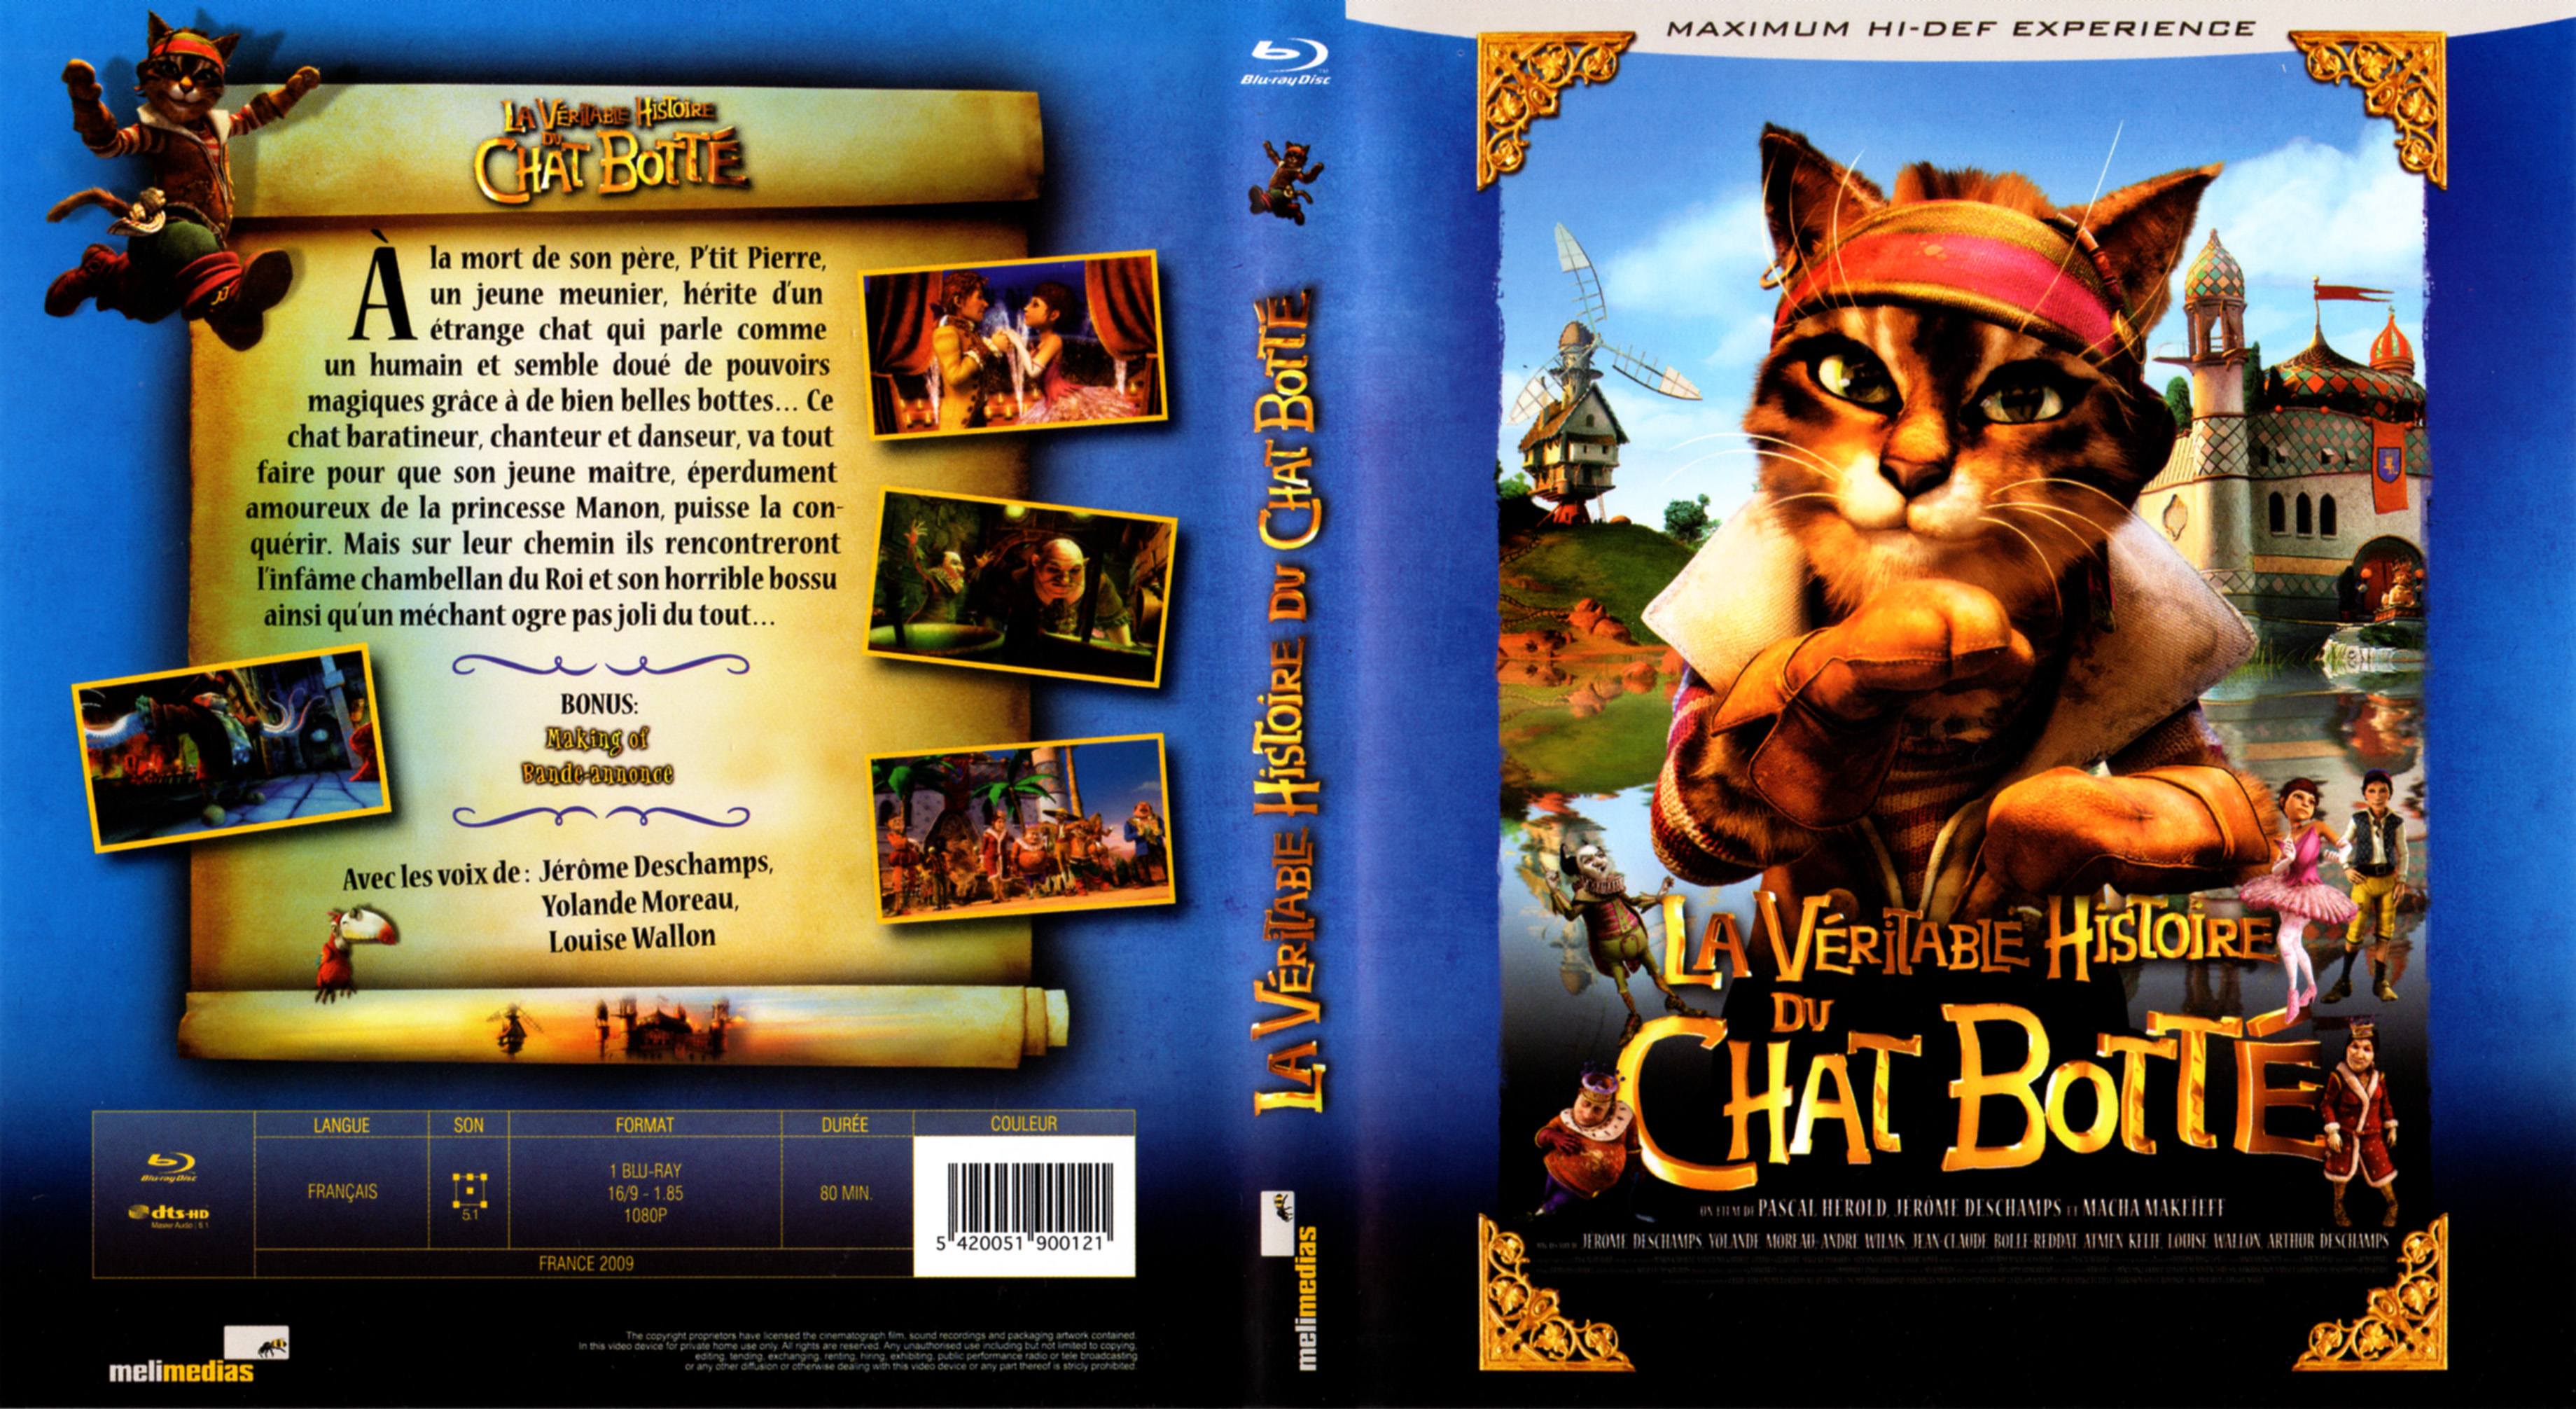 Jaquette DVD La vritable histoire du chat bott (BLU-RAY) v2